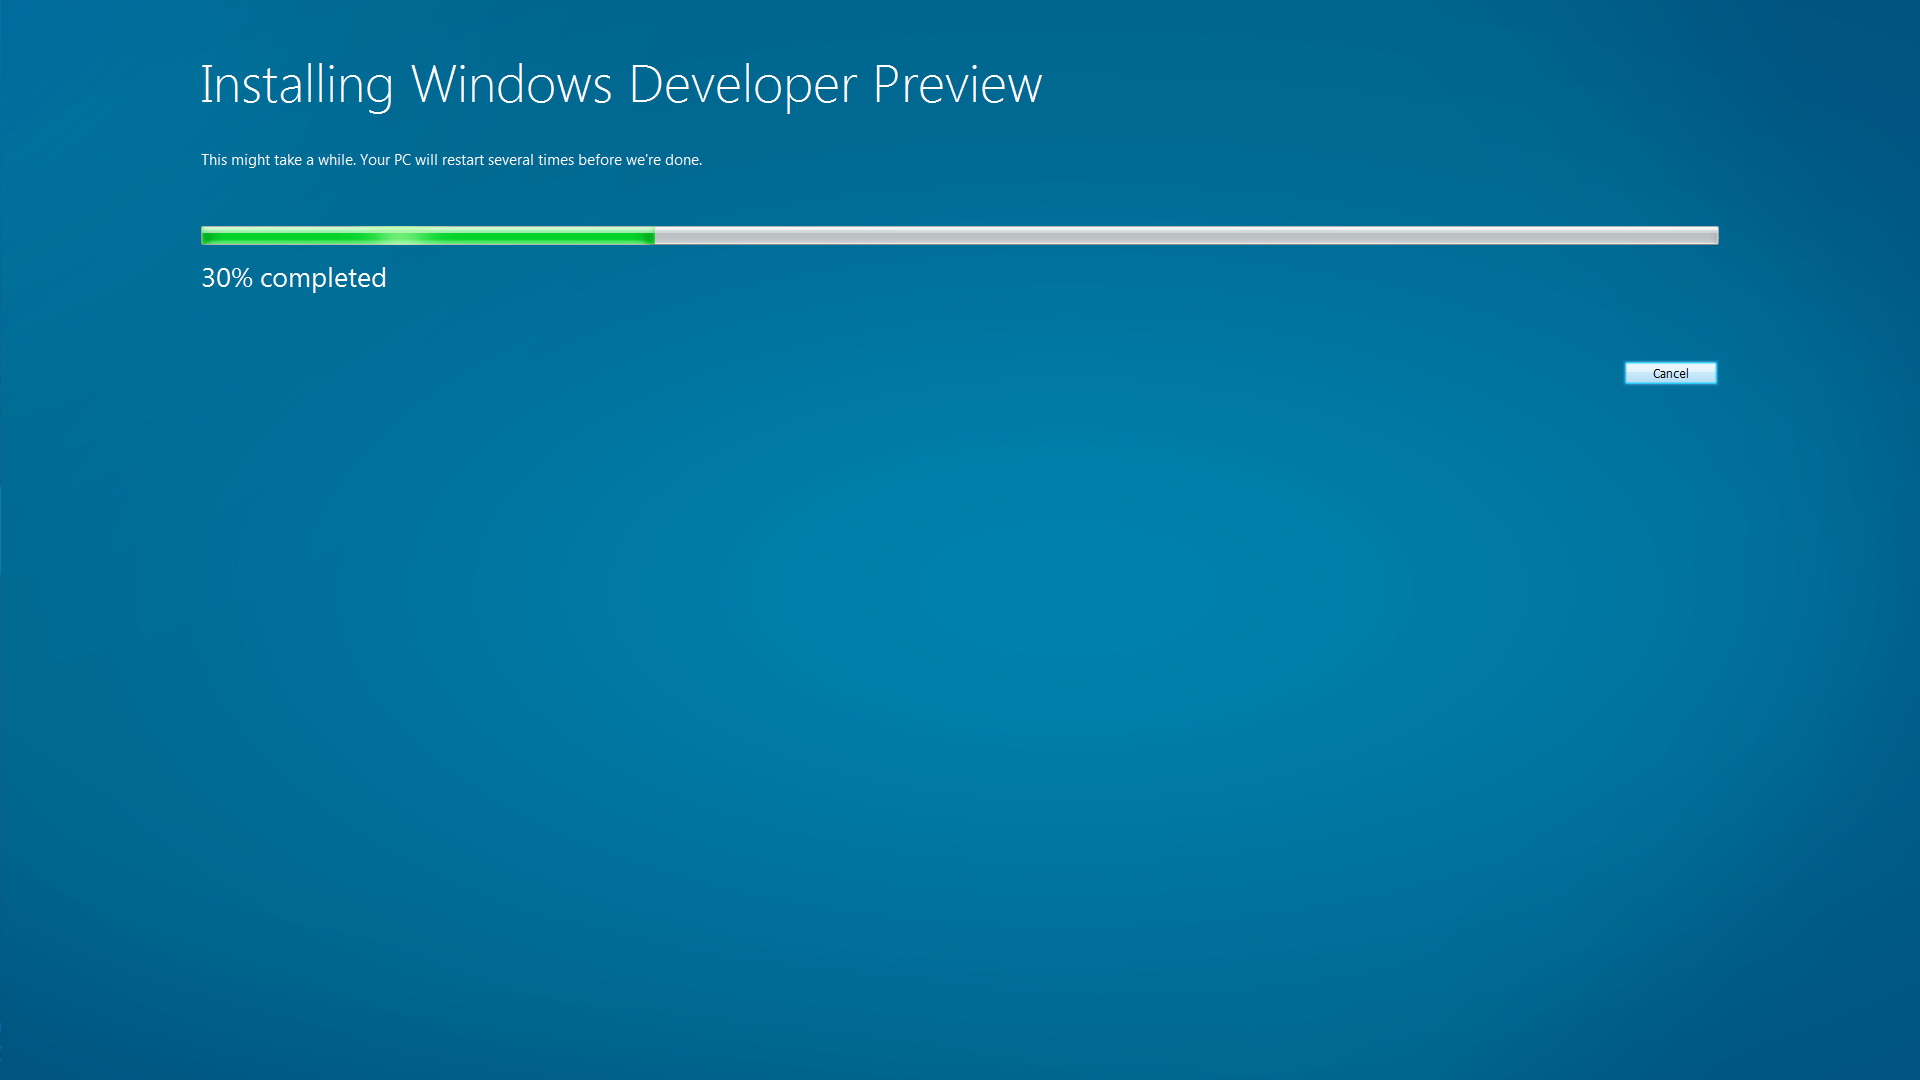 Loading windows 10. Экран установки виндовс 10. Windows 8 установщик. Загрузка виндовс 10. Загрузка виндовс 8.